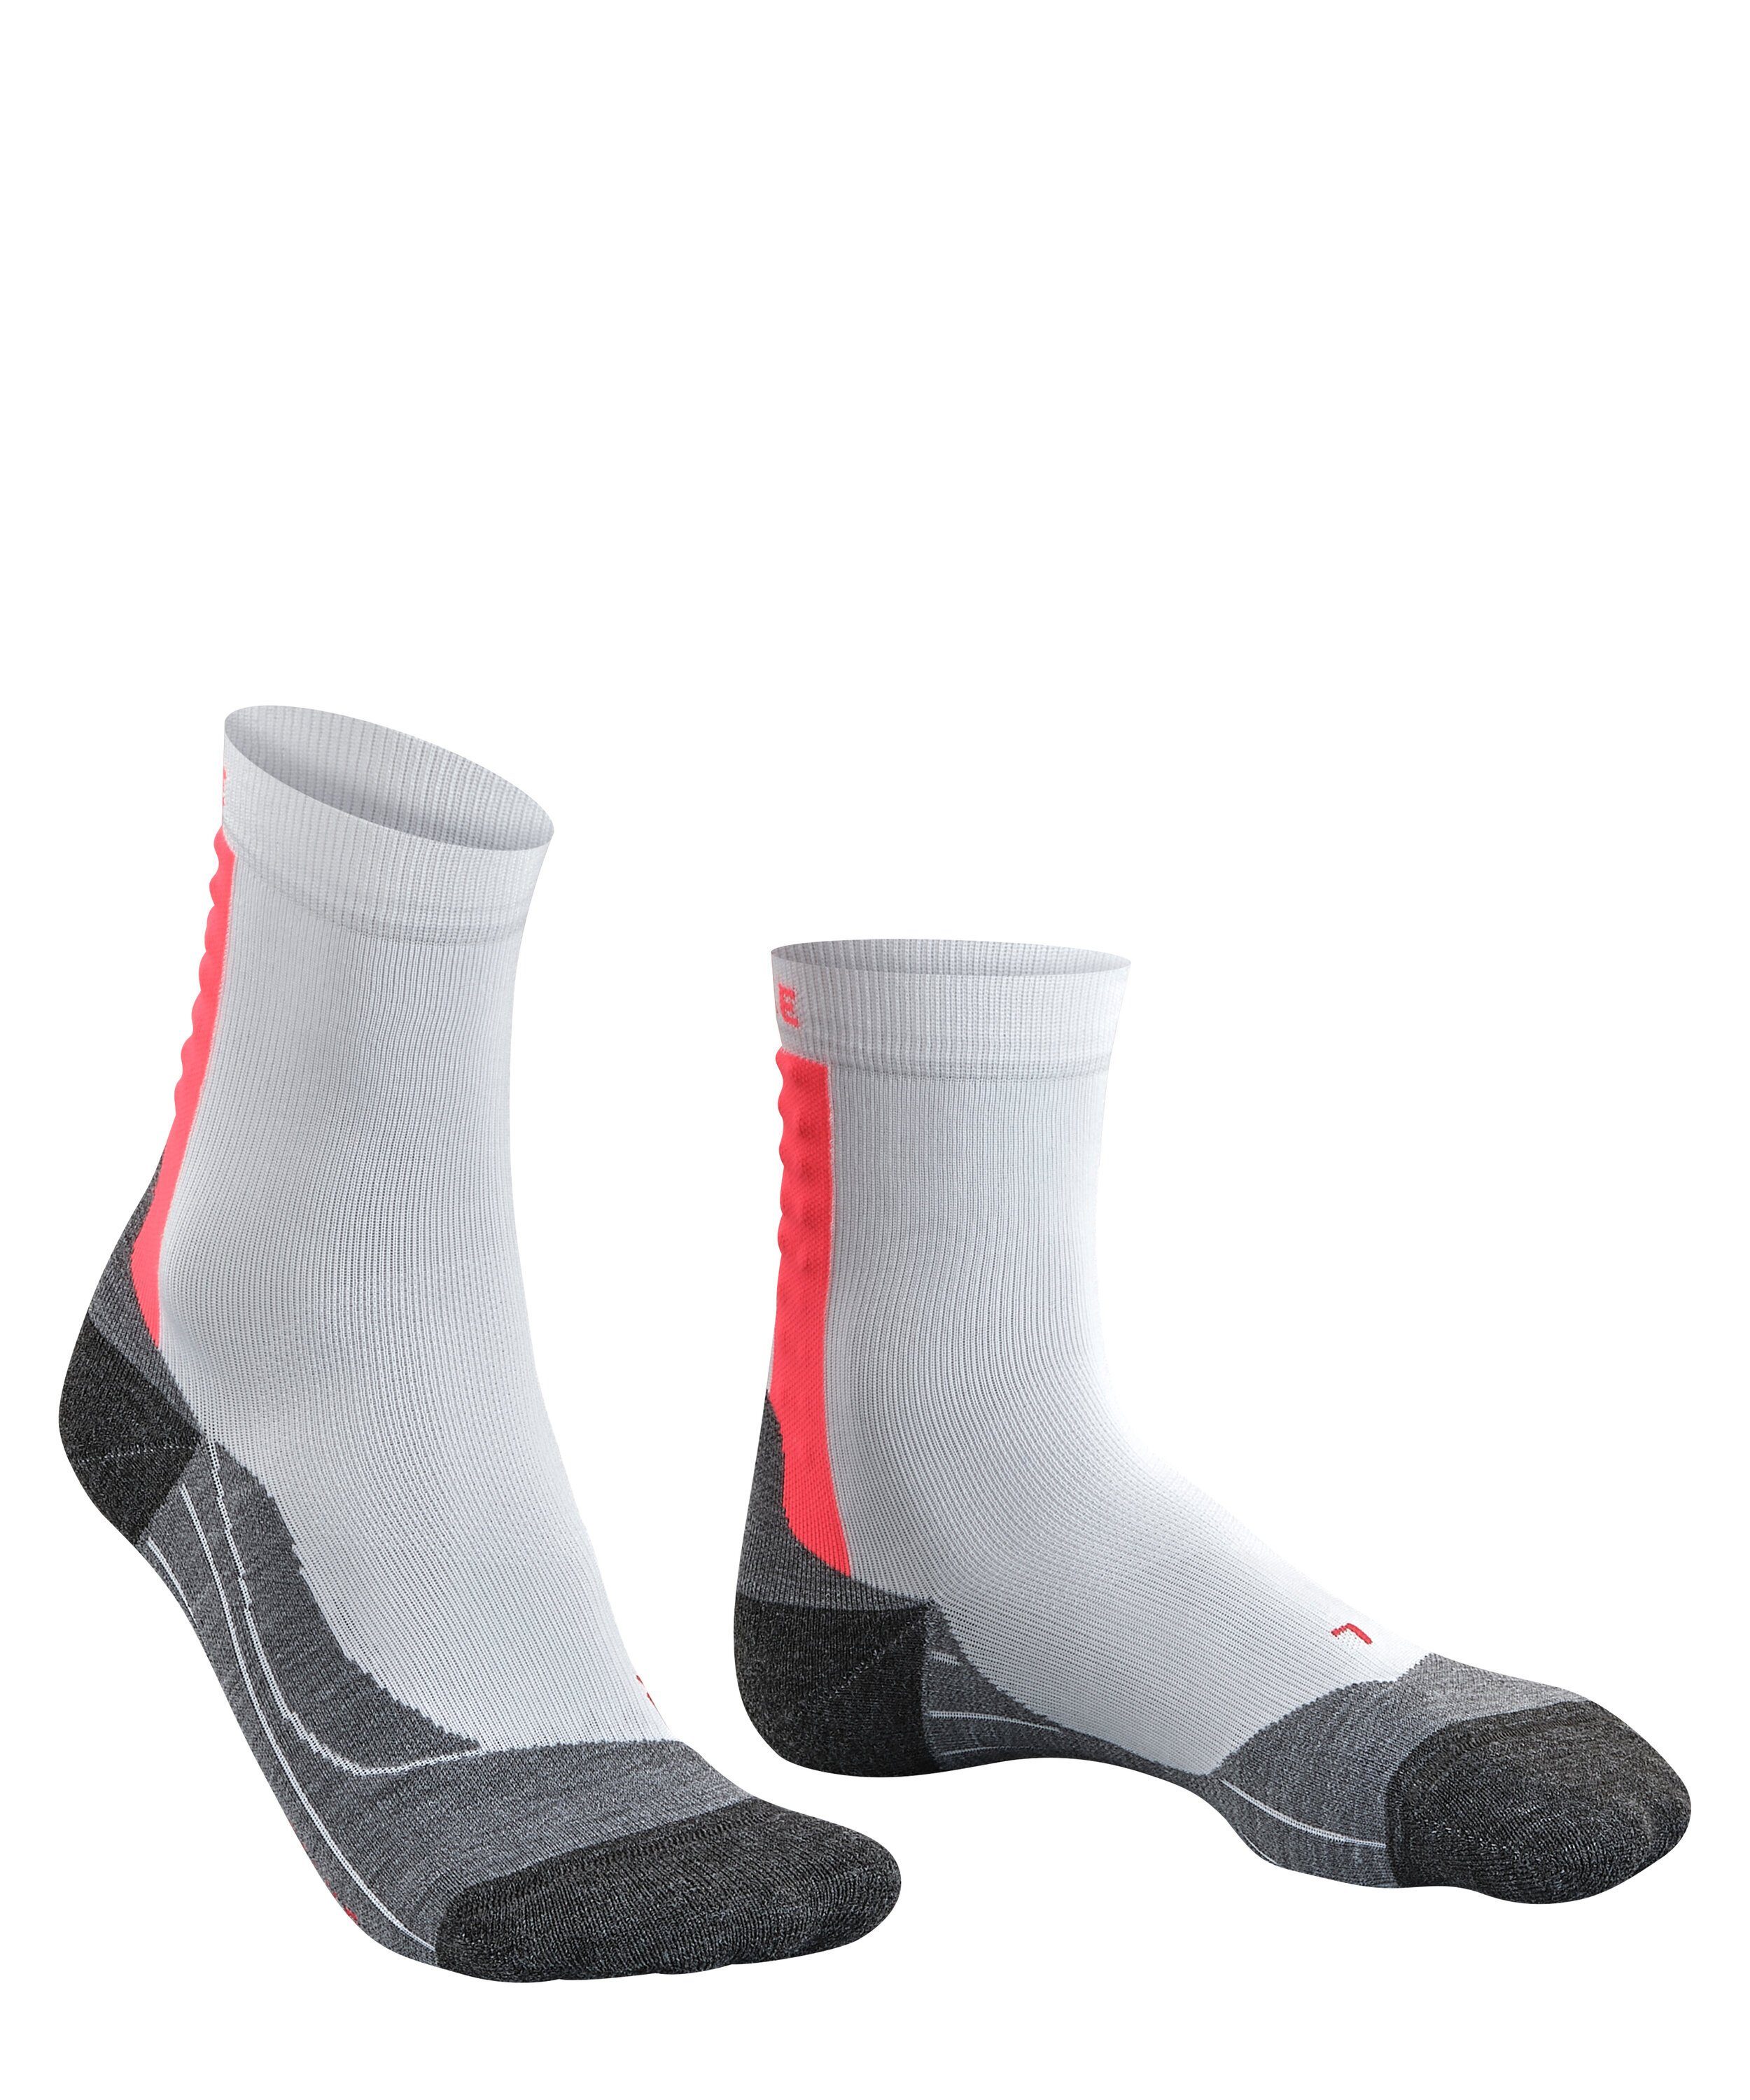 FALKE white-neon red Sportsocken (1-Paar) (2028) hilft Achilles Achillessehnen-Beschwerden bei